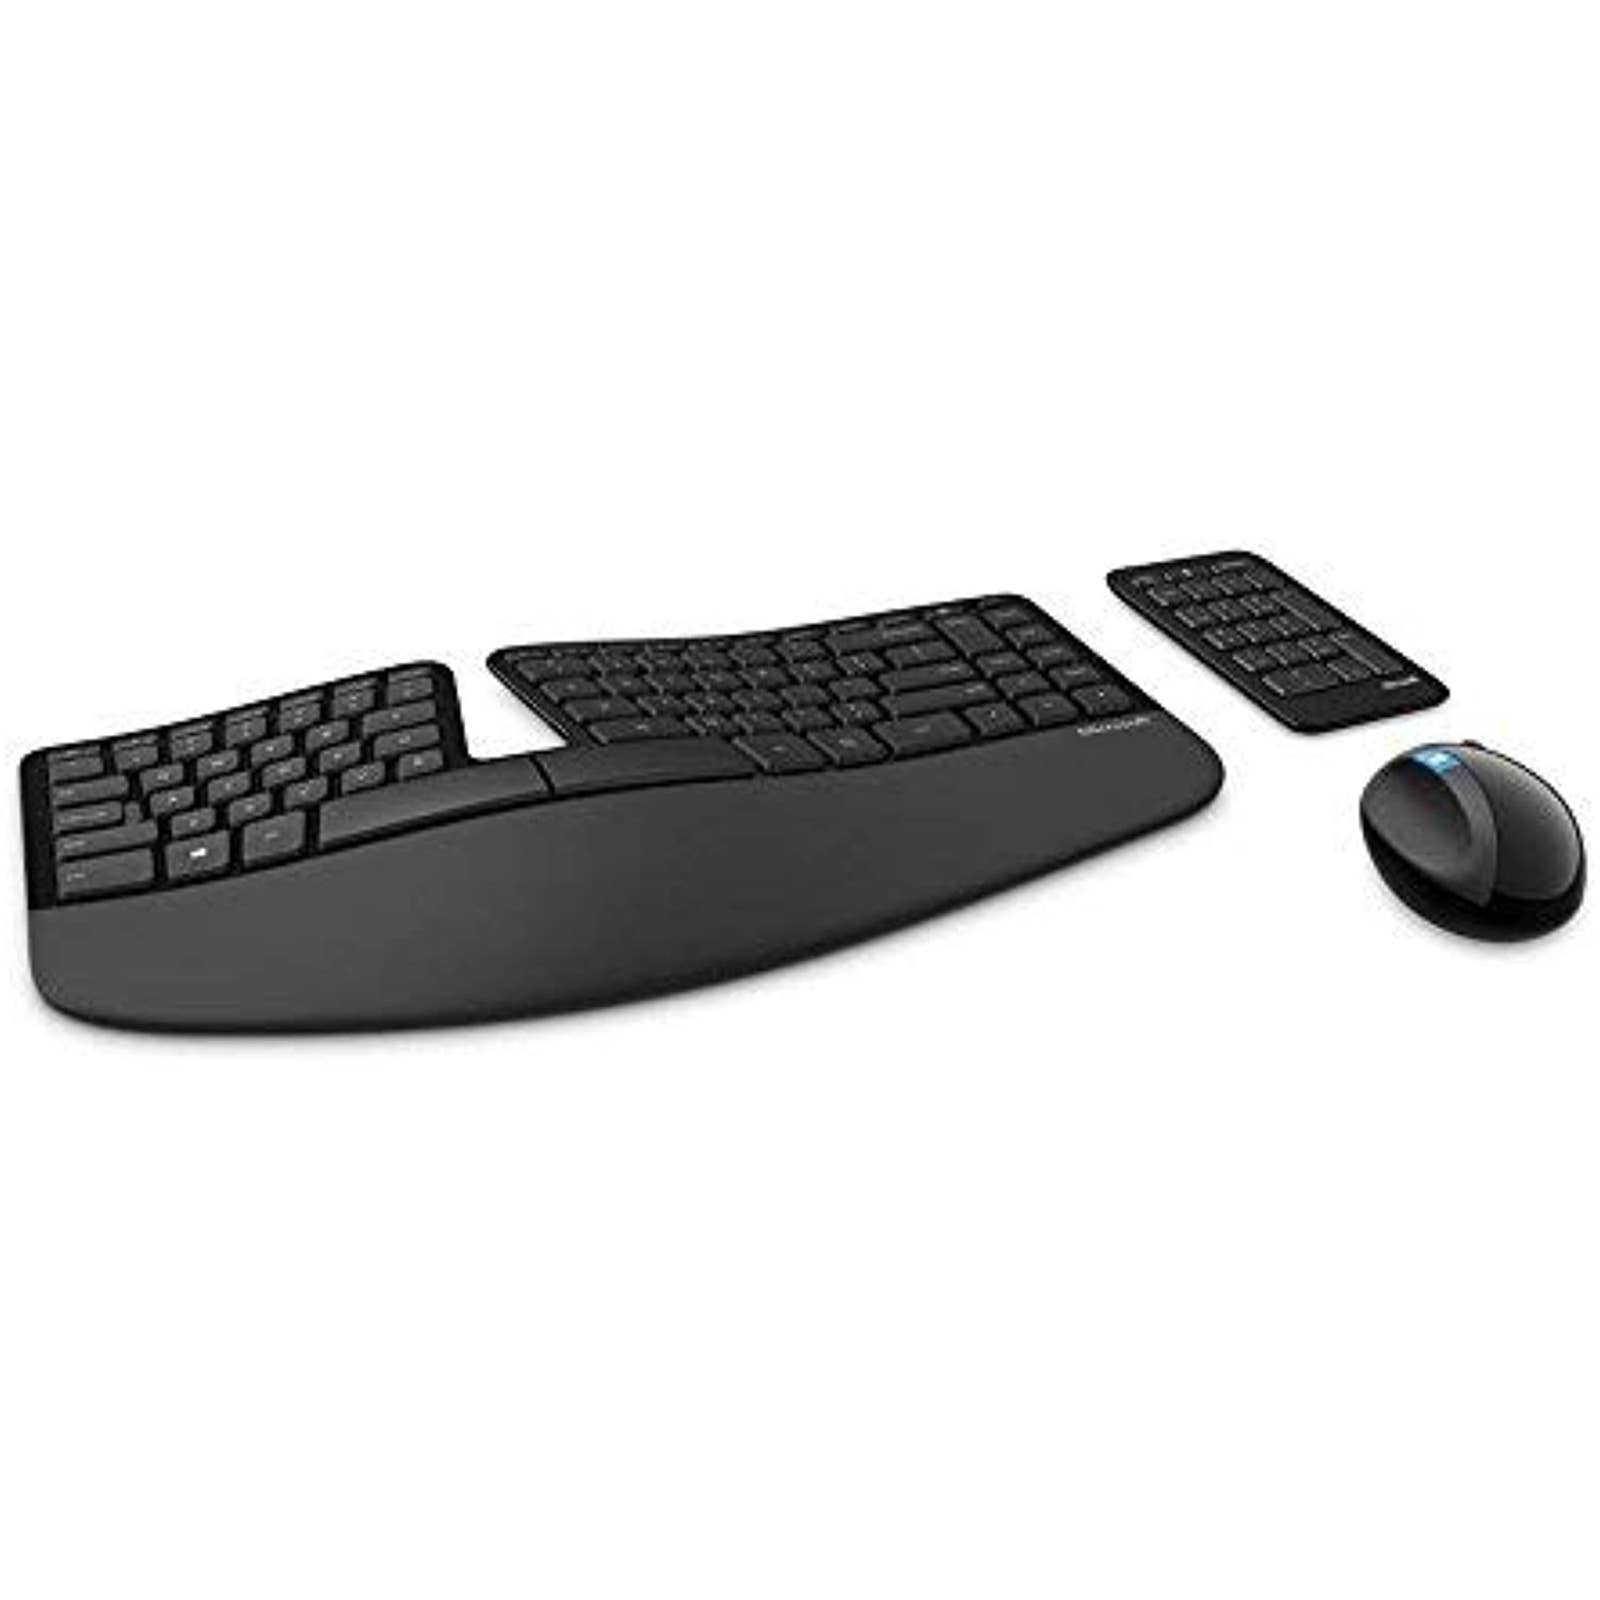 Microsoft - L5V-00001 Sculpt Desktop Ergonomic Full-size Wireless USB Keyboard and Mouse Bundle - Black